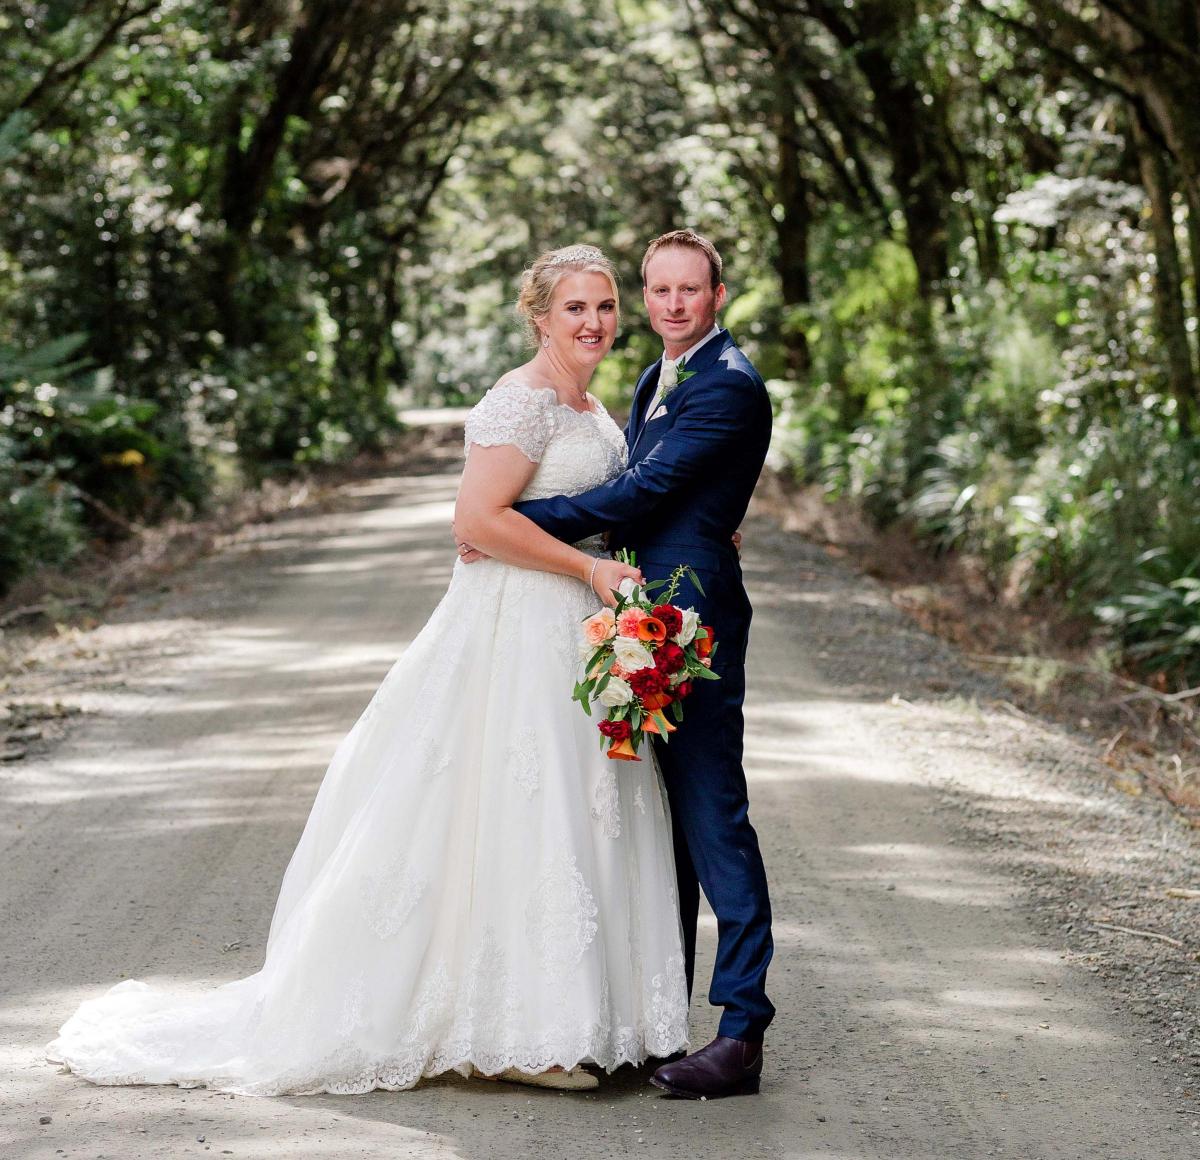 Ann Linton, Lanark, and Scott Henderson, of New Zealand were married at River Ridge Retreat, New Zealand

Photo: Heidi Horton Photography